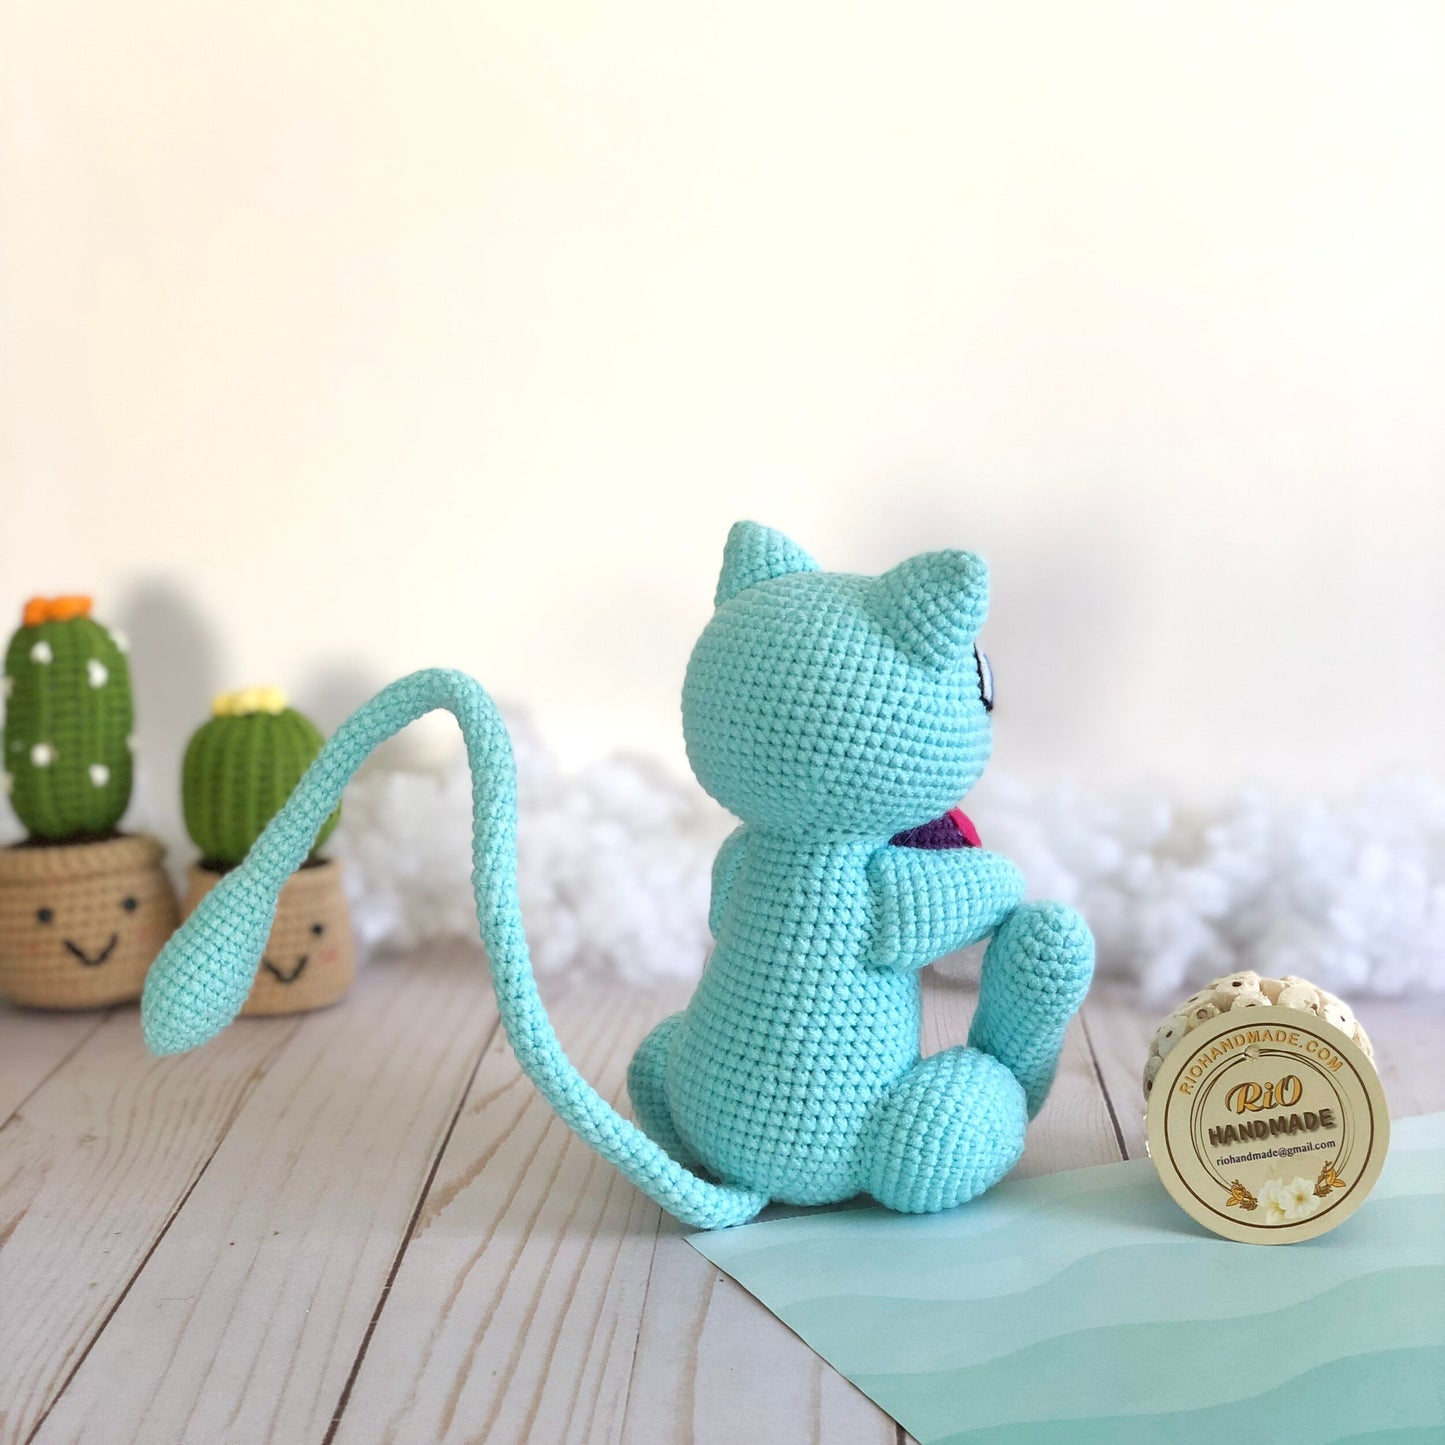 Rio Handmade  Mew, Crochet Mew with ball, Inspired Chibi Pokemon, Amigurumi Toy, cute Toy, adult hobby